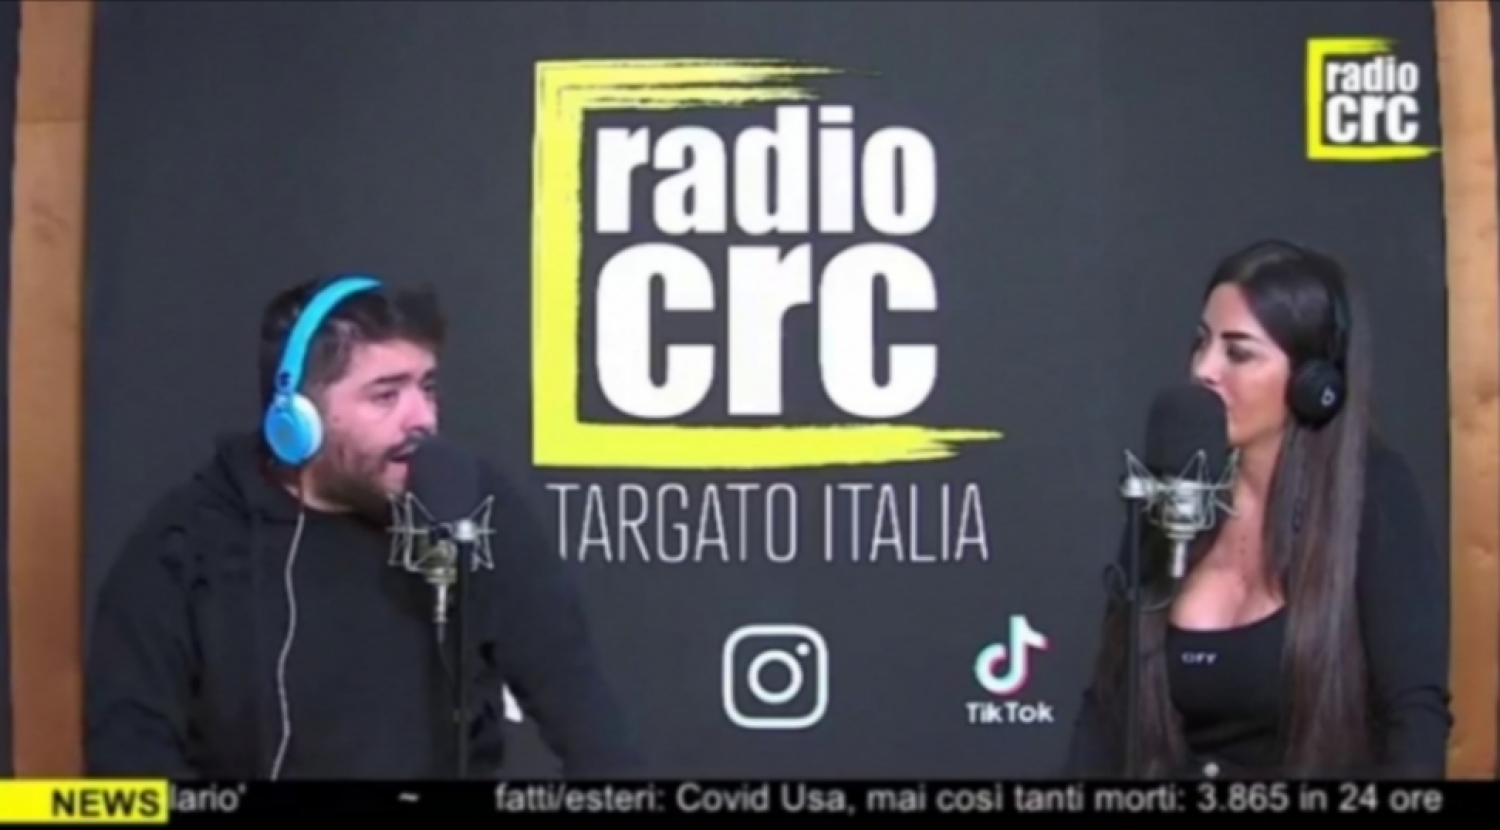 "Arena Maradona" su radio Crc